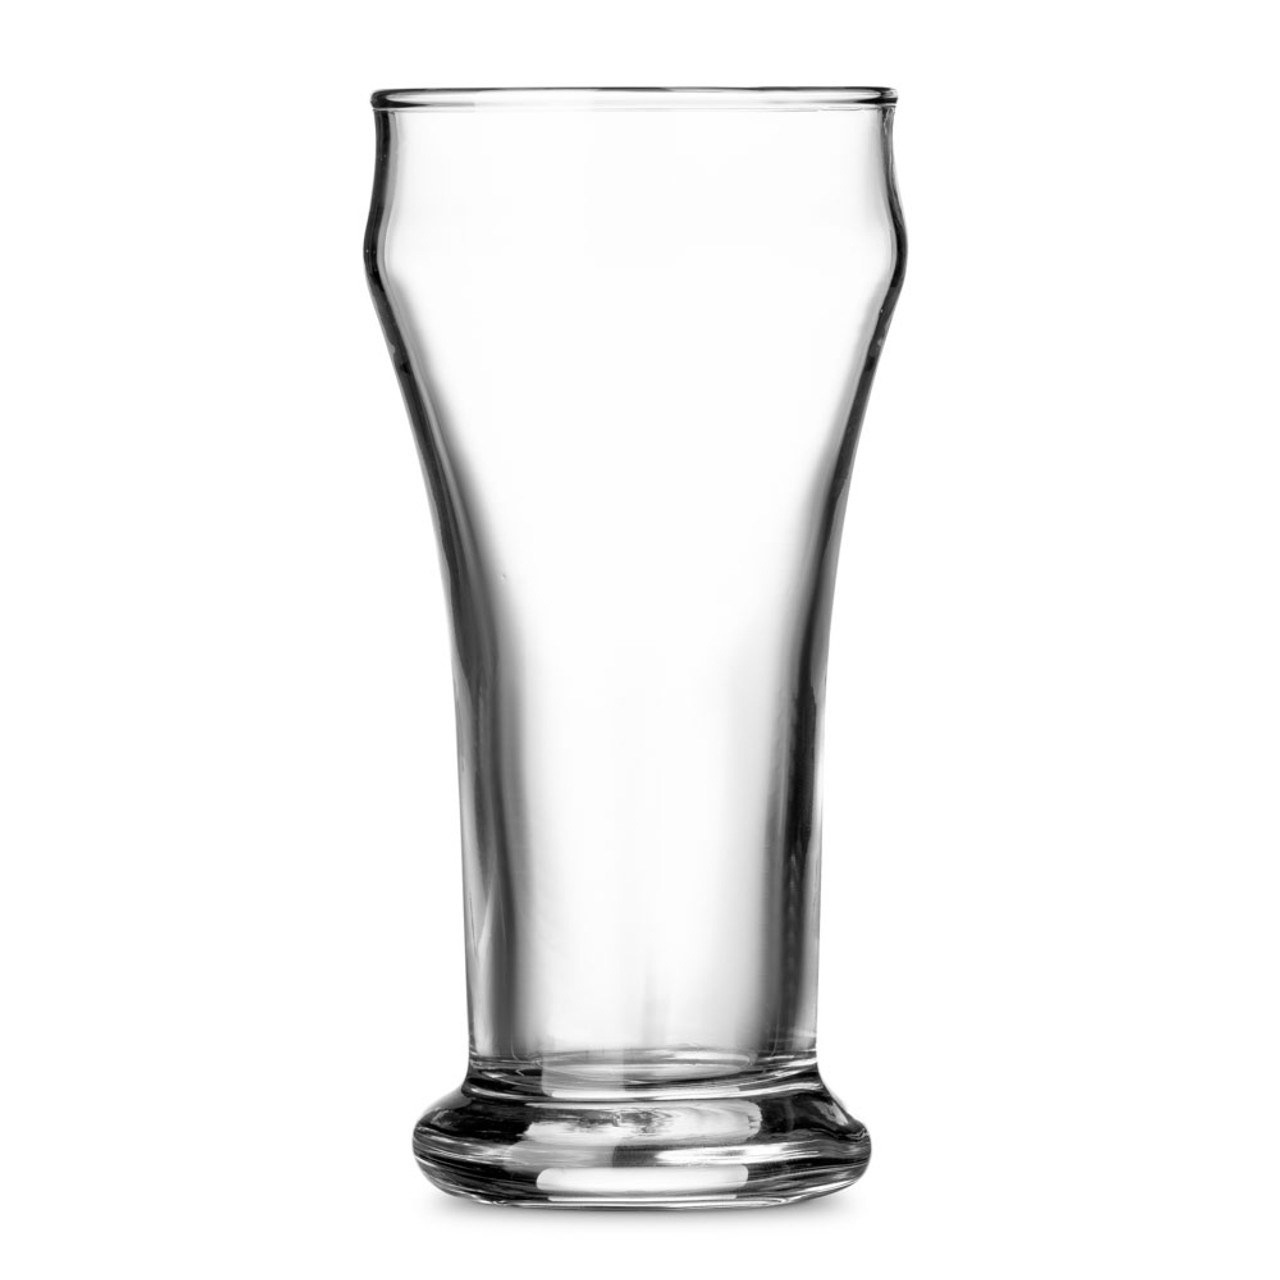 https://cdn11.bigcommerce.com/s-cznxq08r7/images/stencil/1280x1280/products/4662/12939/388255-Libbey-Heavy-Base-Sham-Pilsner-Beer-Glass-6-oz-02__27161.1609279131.jpg?c=1